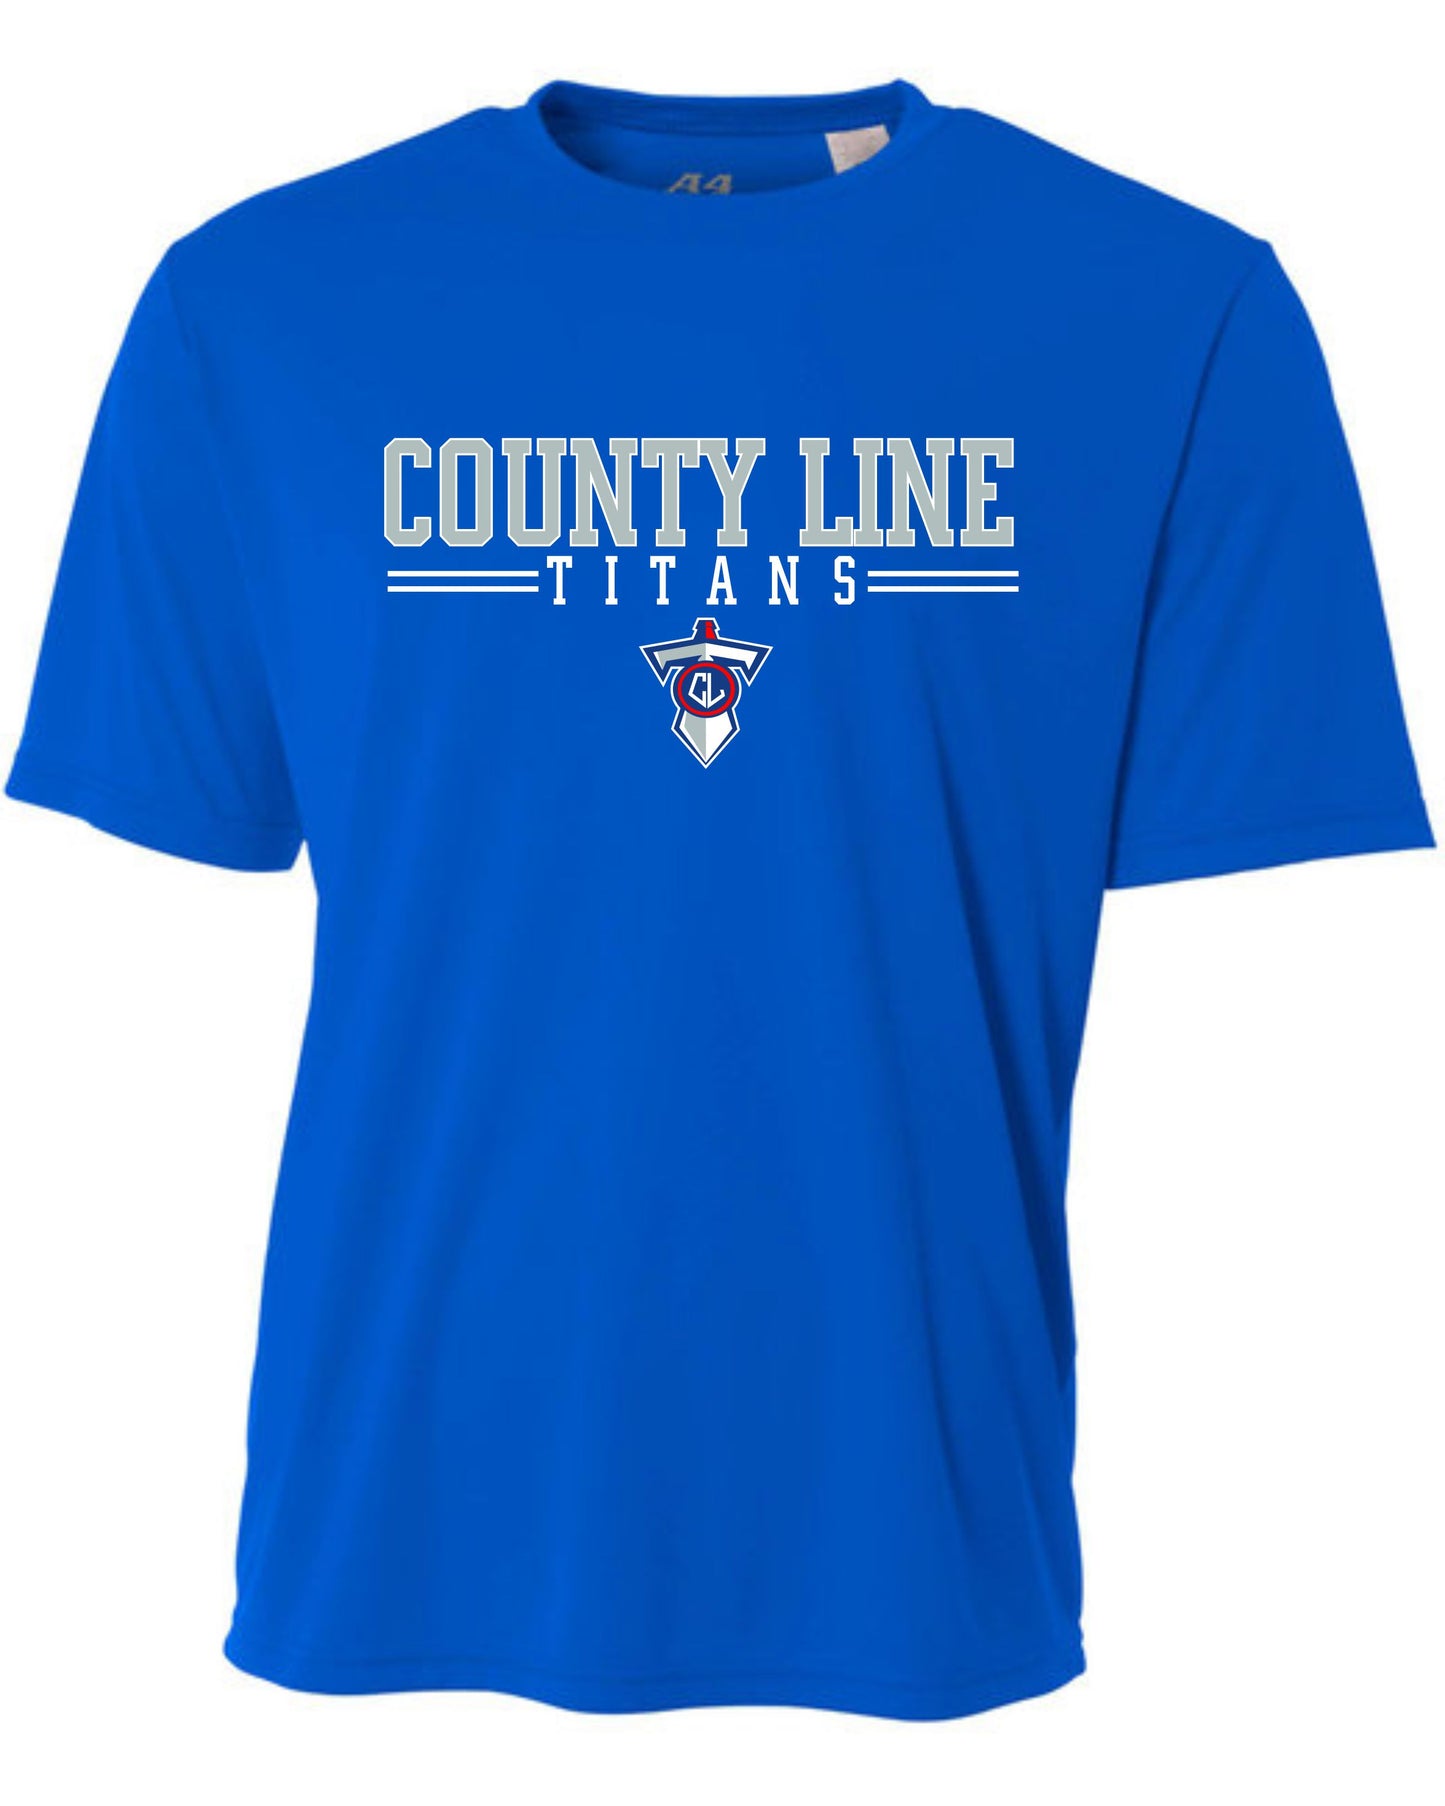 Titans County Line Sword T-Shirt